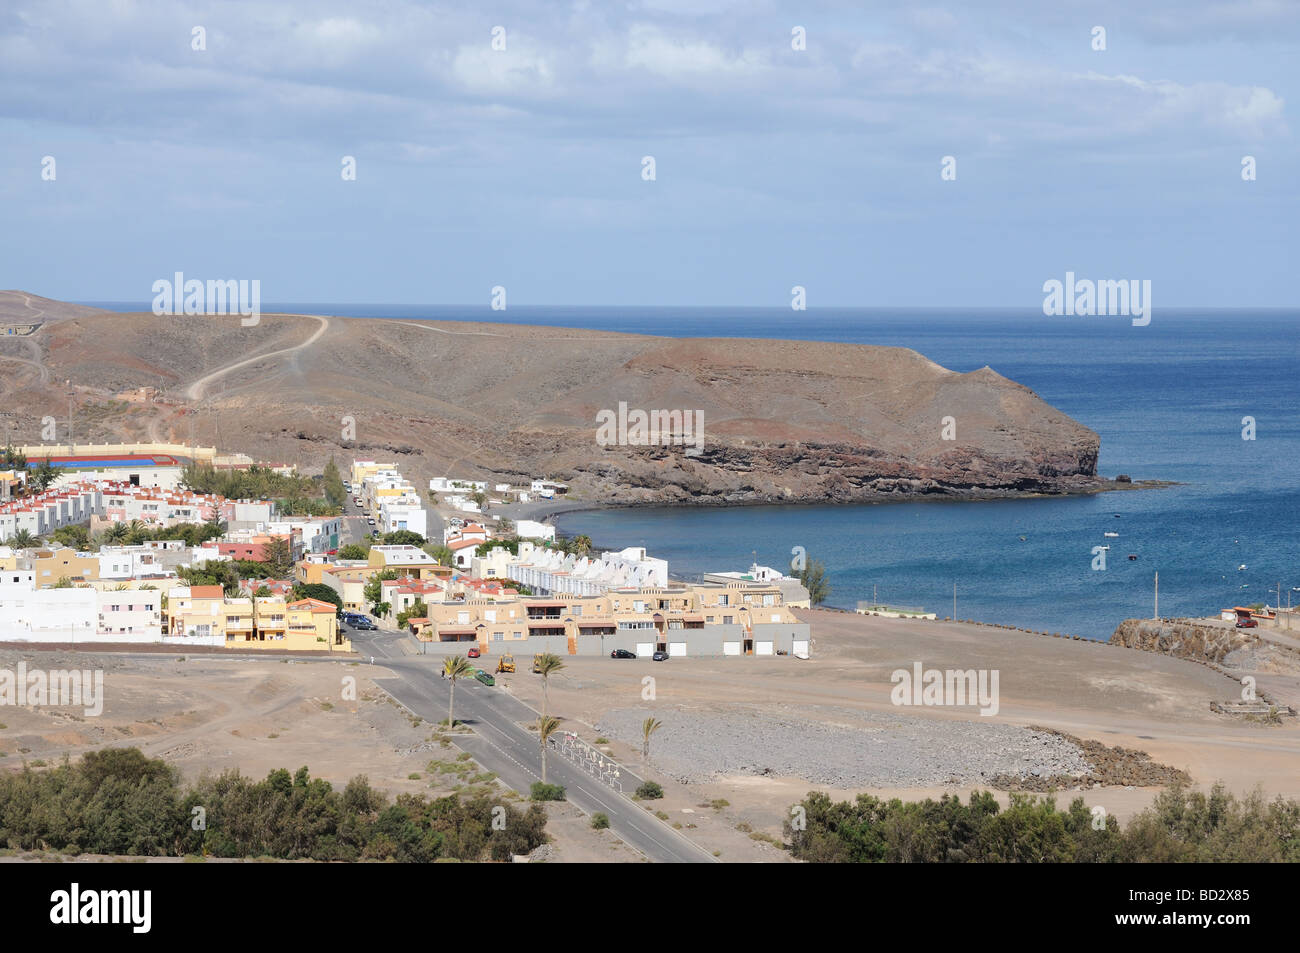 Aerial view over village La Lajita, Canary Island Fuerteventura, Spain Stock Photo